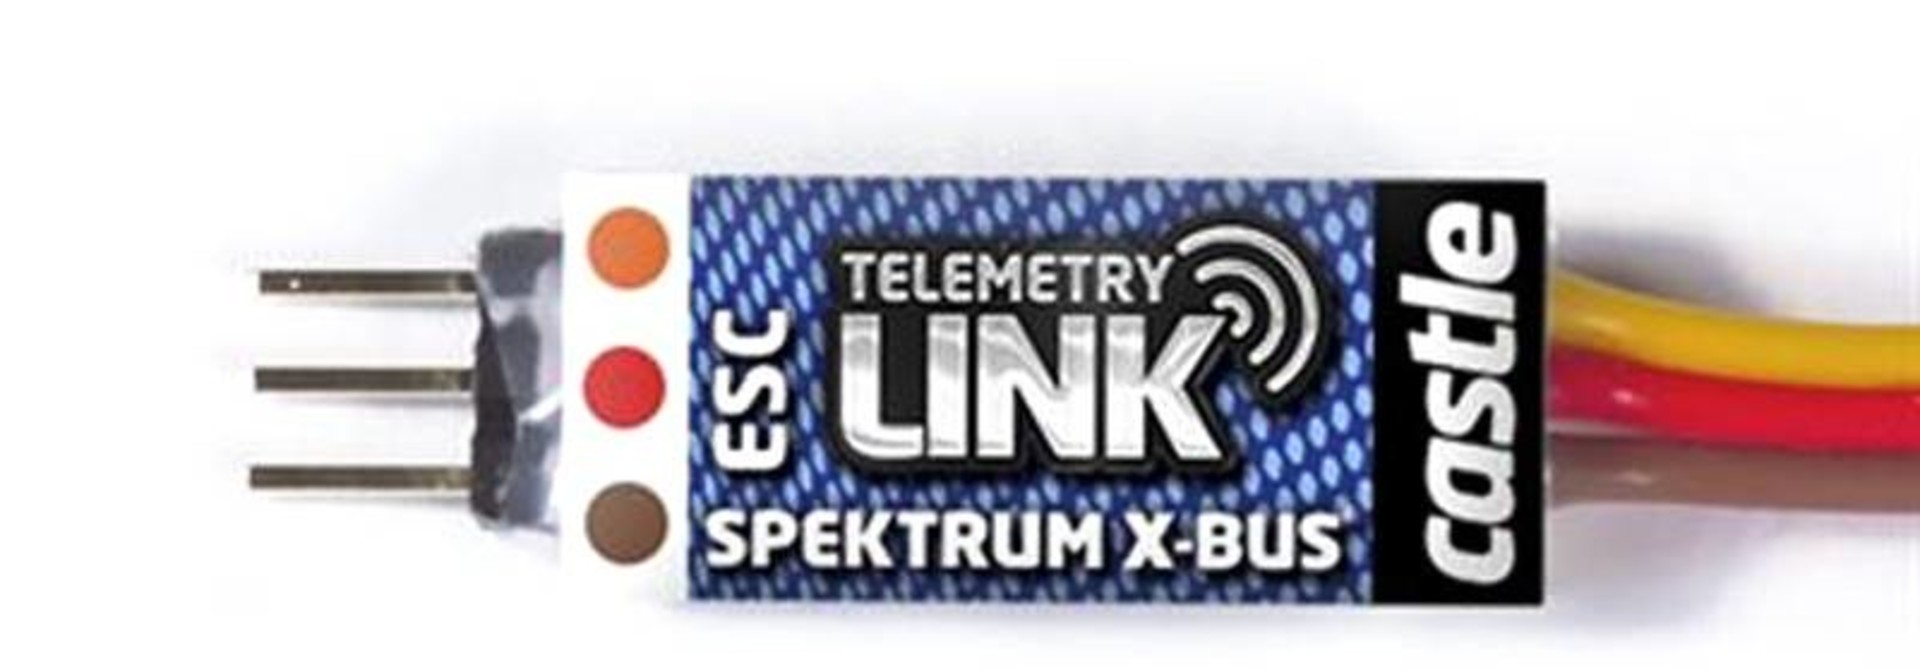 Castle - Telemetry Link Spektrum X-Bus kabelset